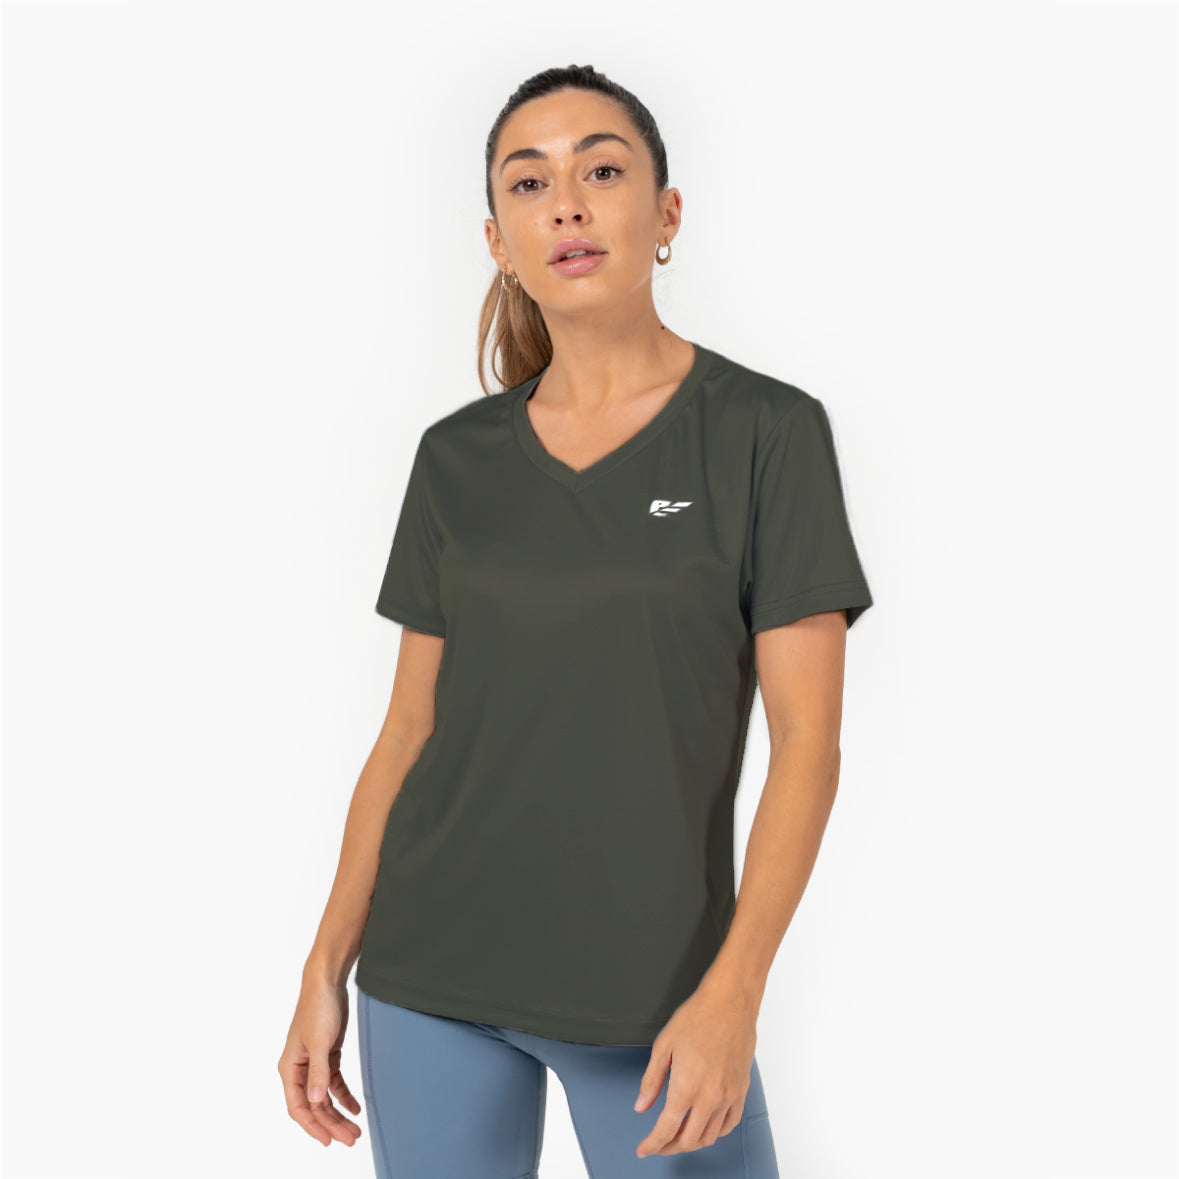 Palmfit Evolve 2.0 T-Shirt, Green